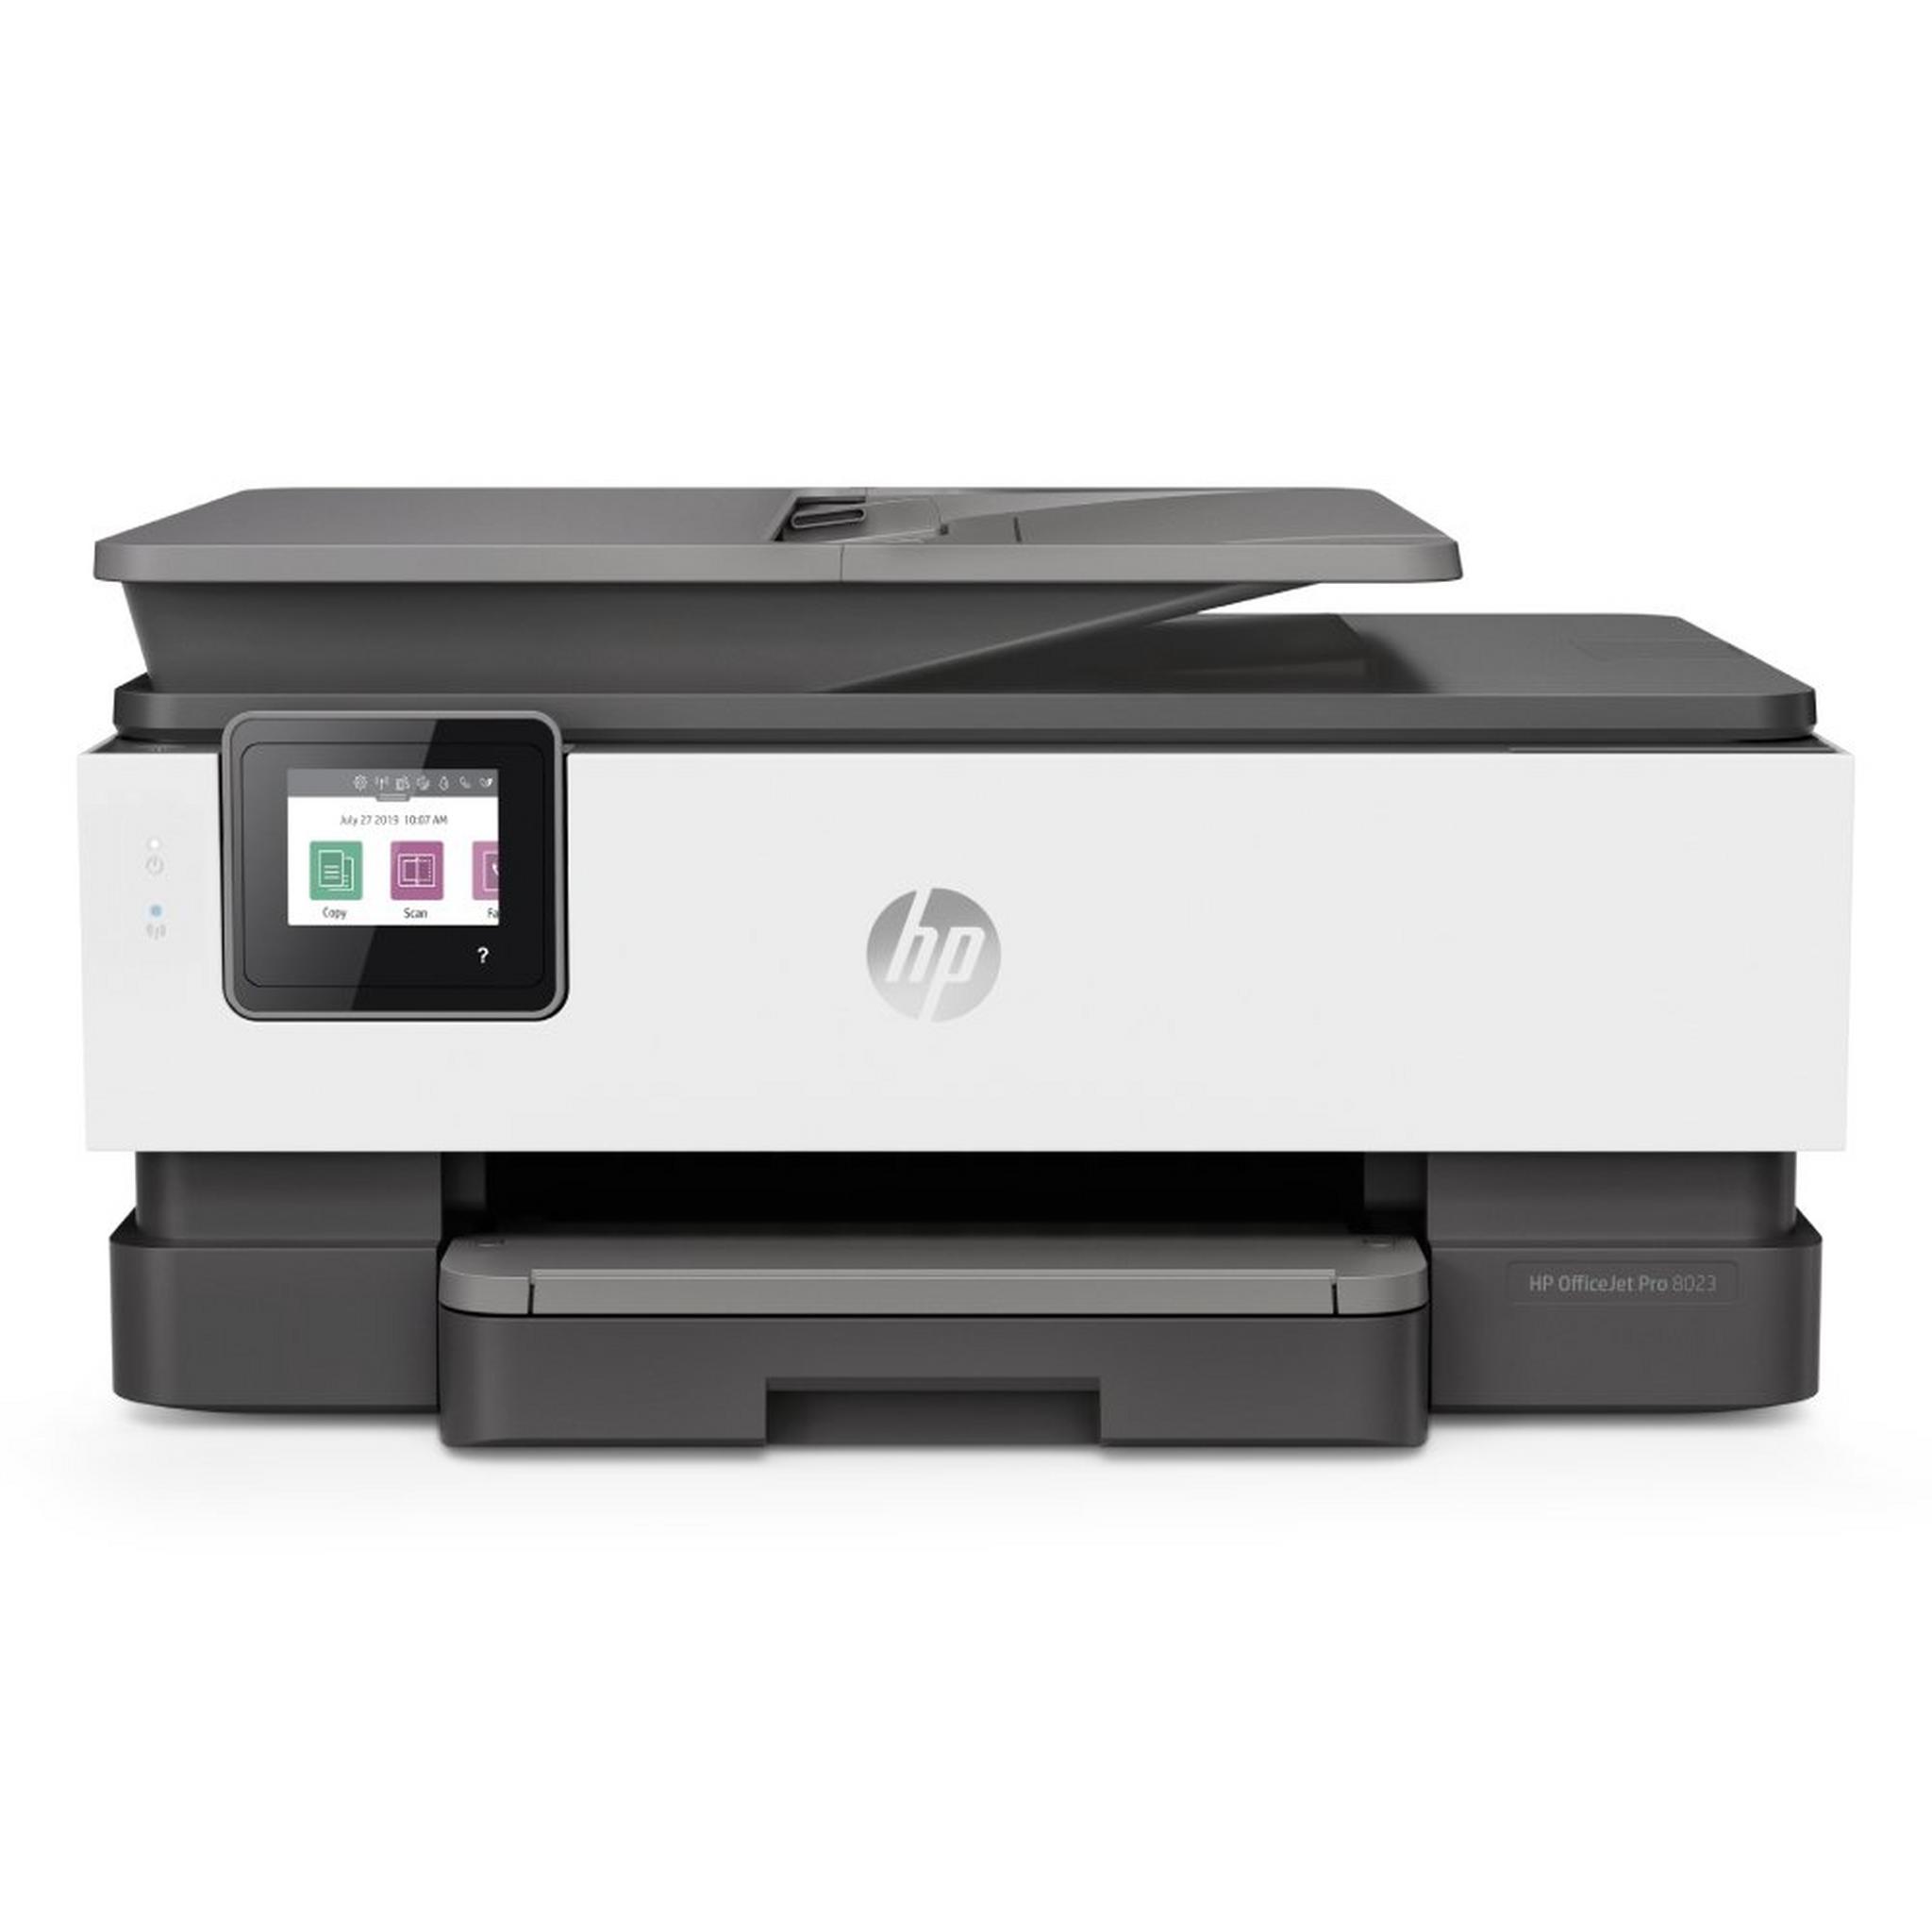 HP OfficeJet Pro 8023 All-in-One Printer (1KR64B)